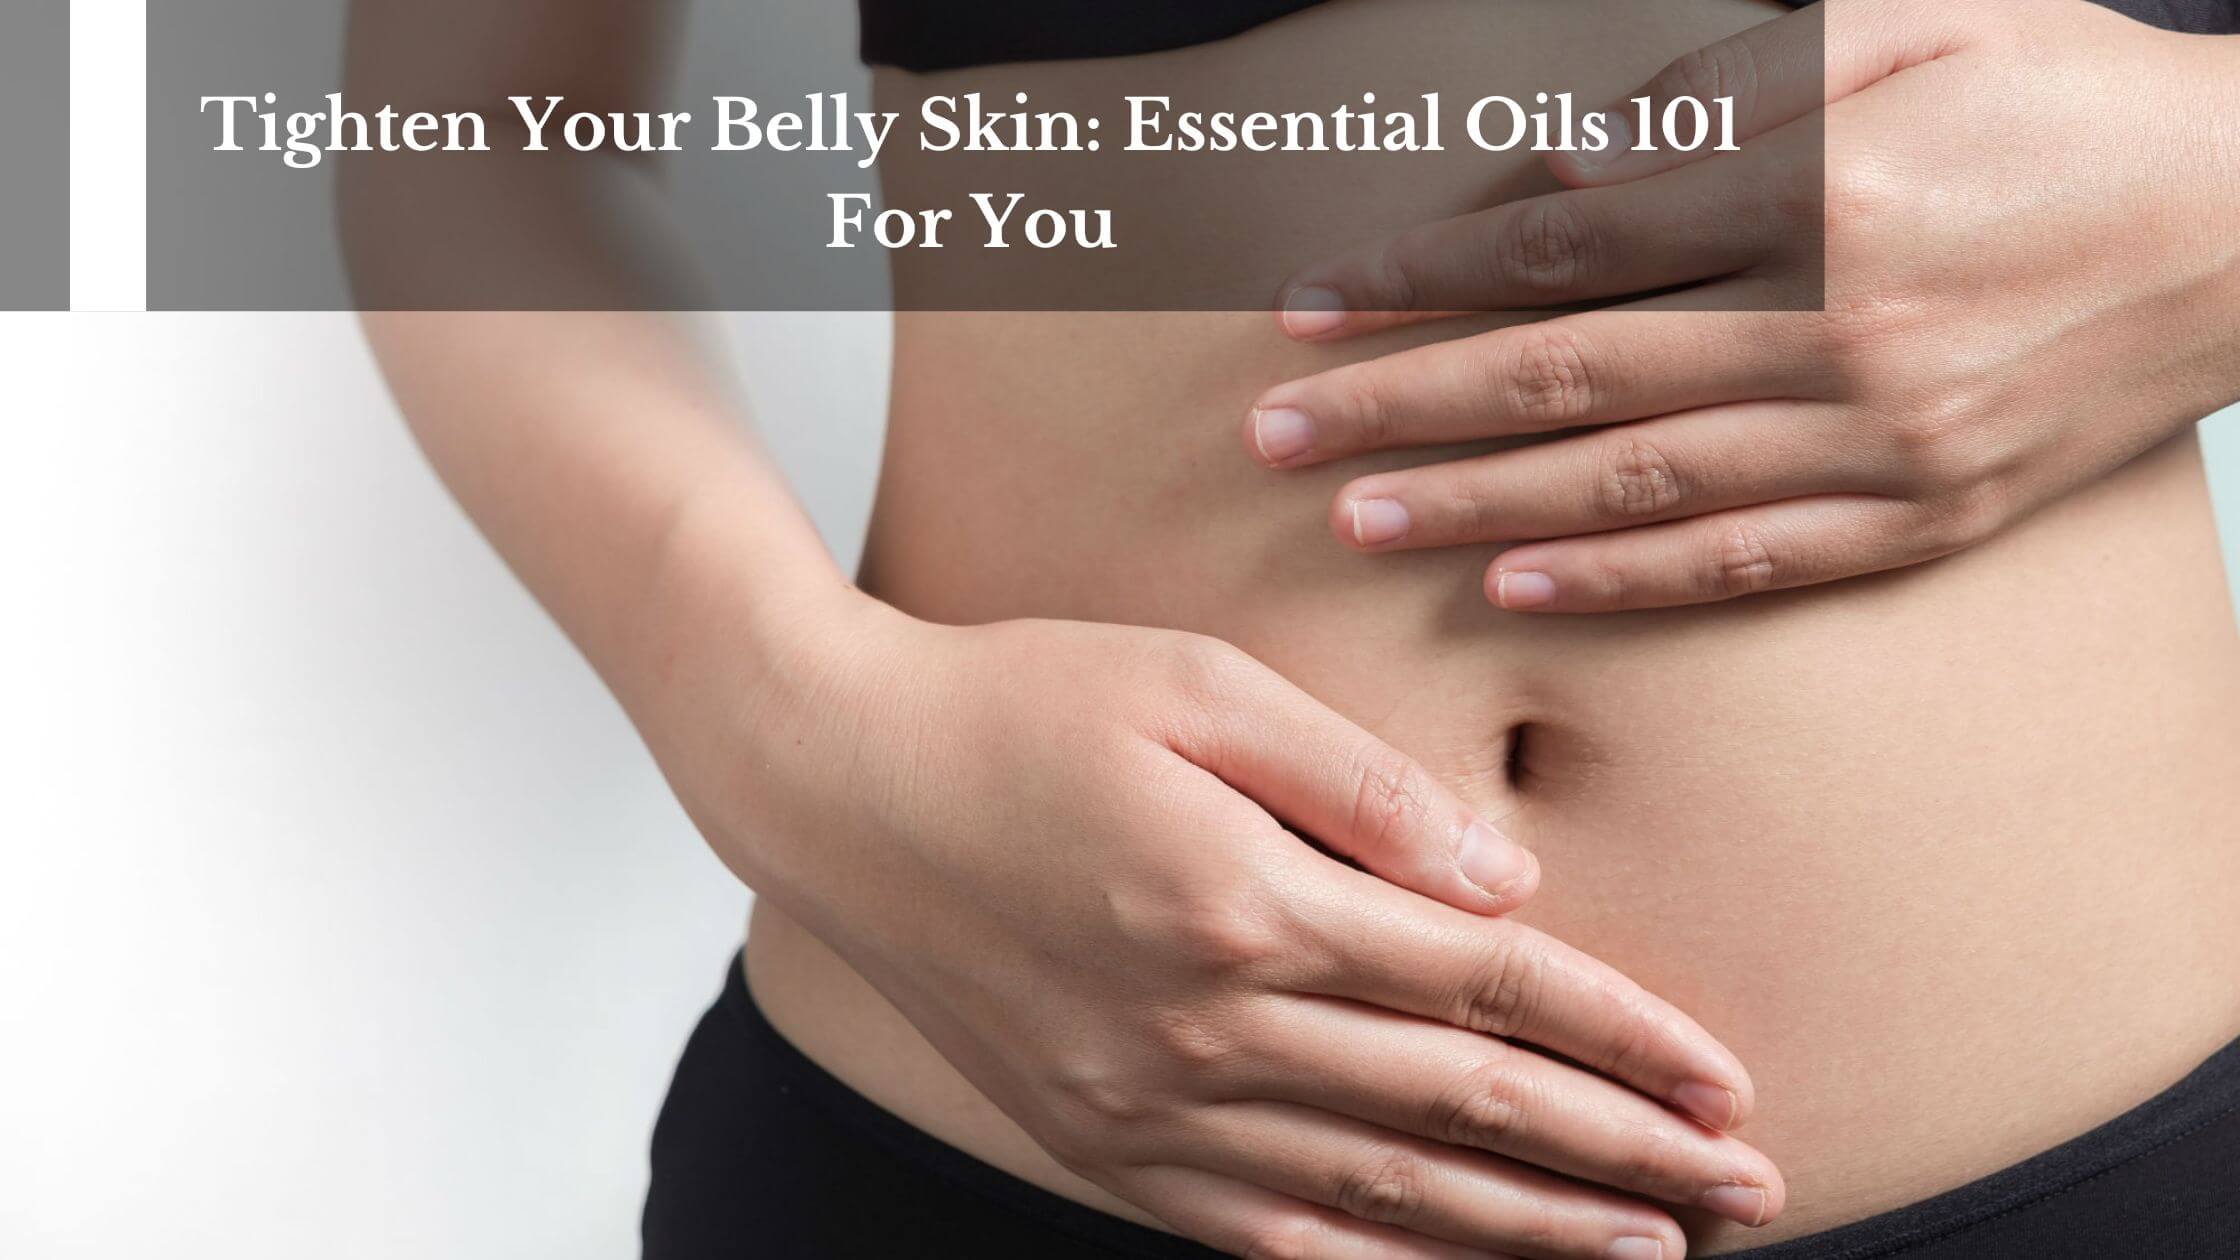 https://mokshalifestyle.com/wp-content/uploads/2023/03/Tighten-Your-Belly-Skin-Essential-Oils-101-For-You-2-1.jpg